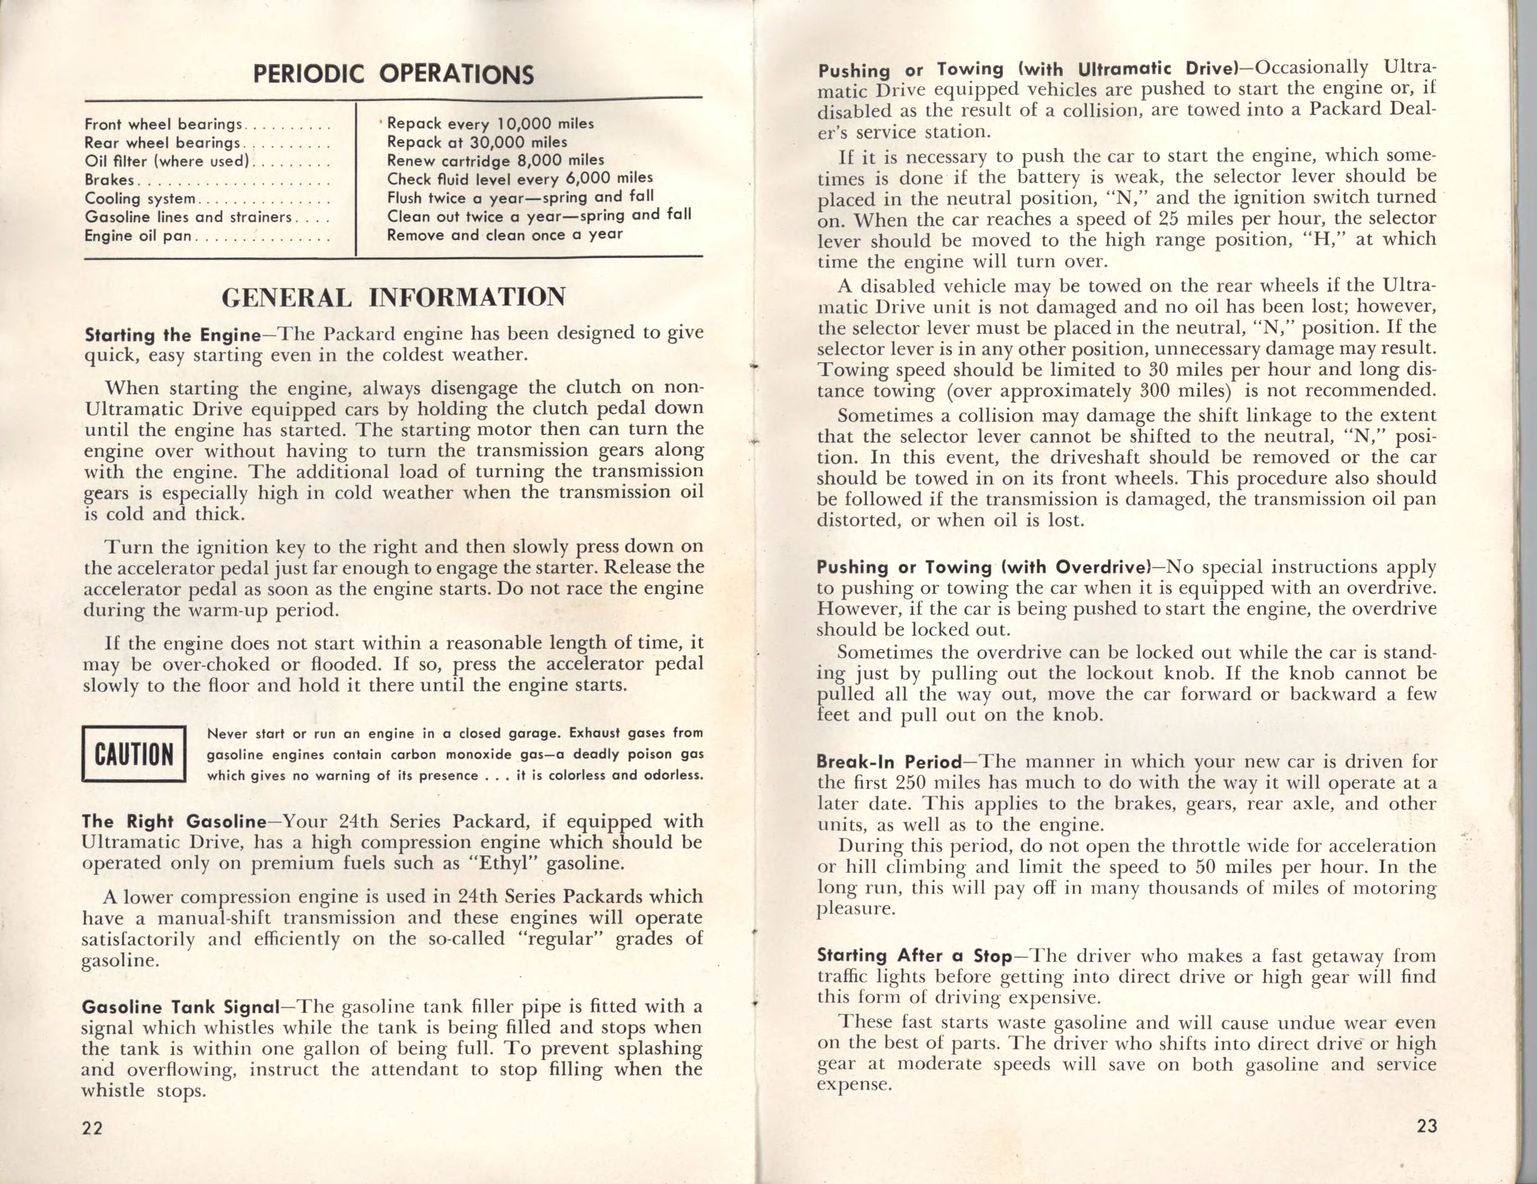 1951_Packard_Manual-22-23